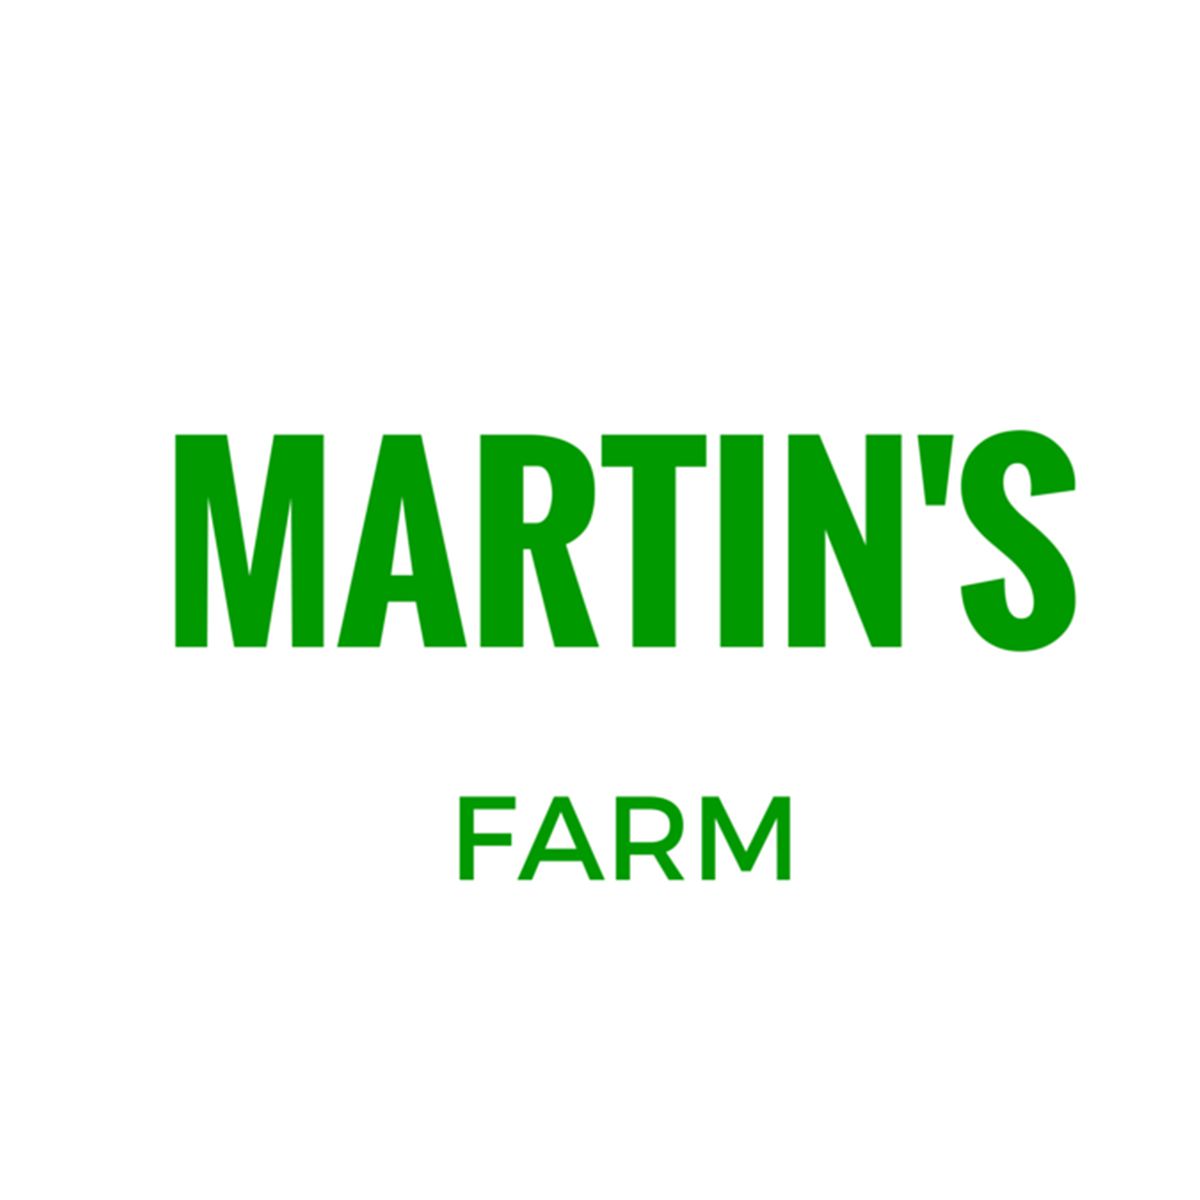 Martin's Farm logo